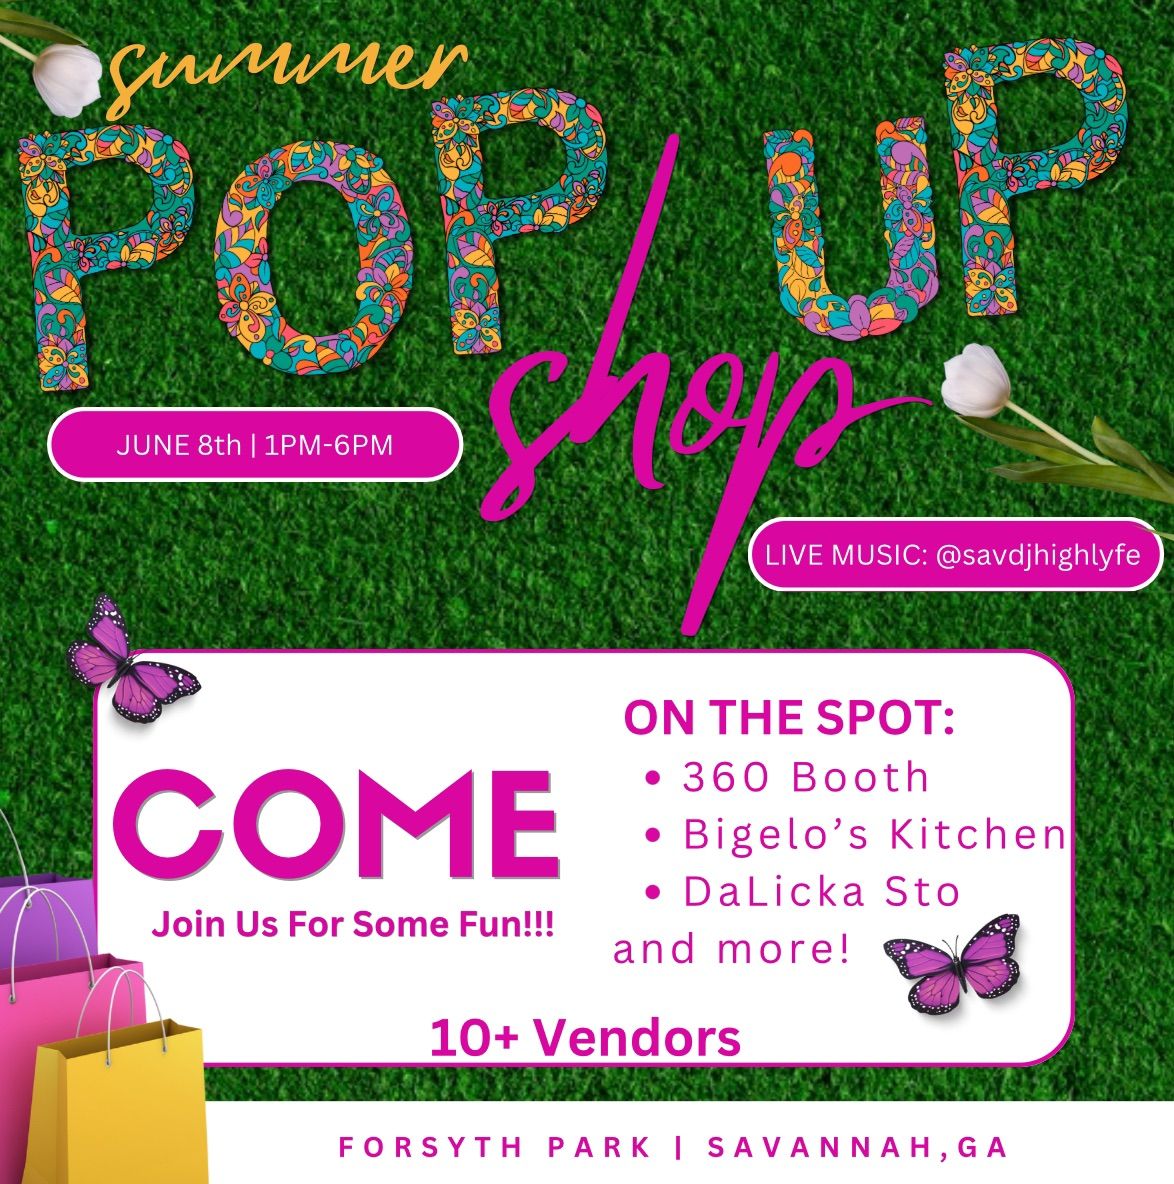 Summer Pop Up Shop \ud83e\udd8b